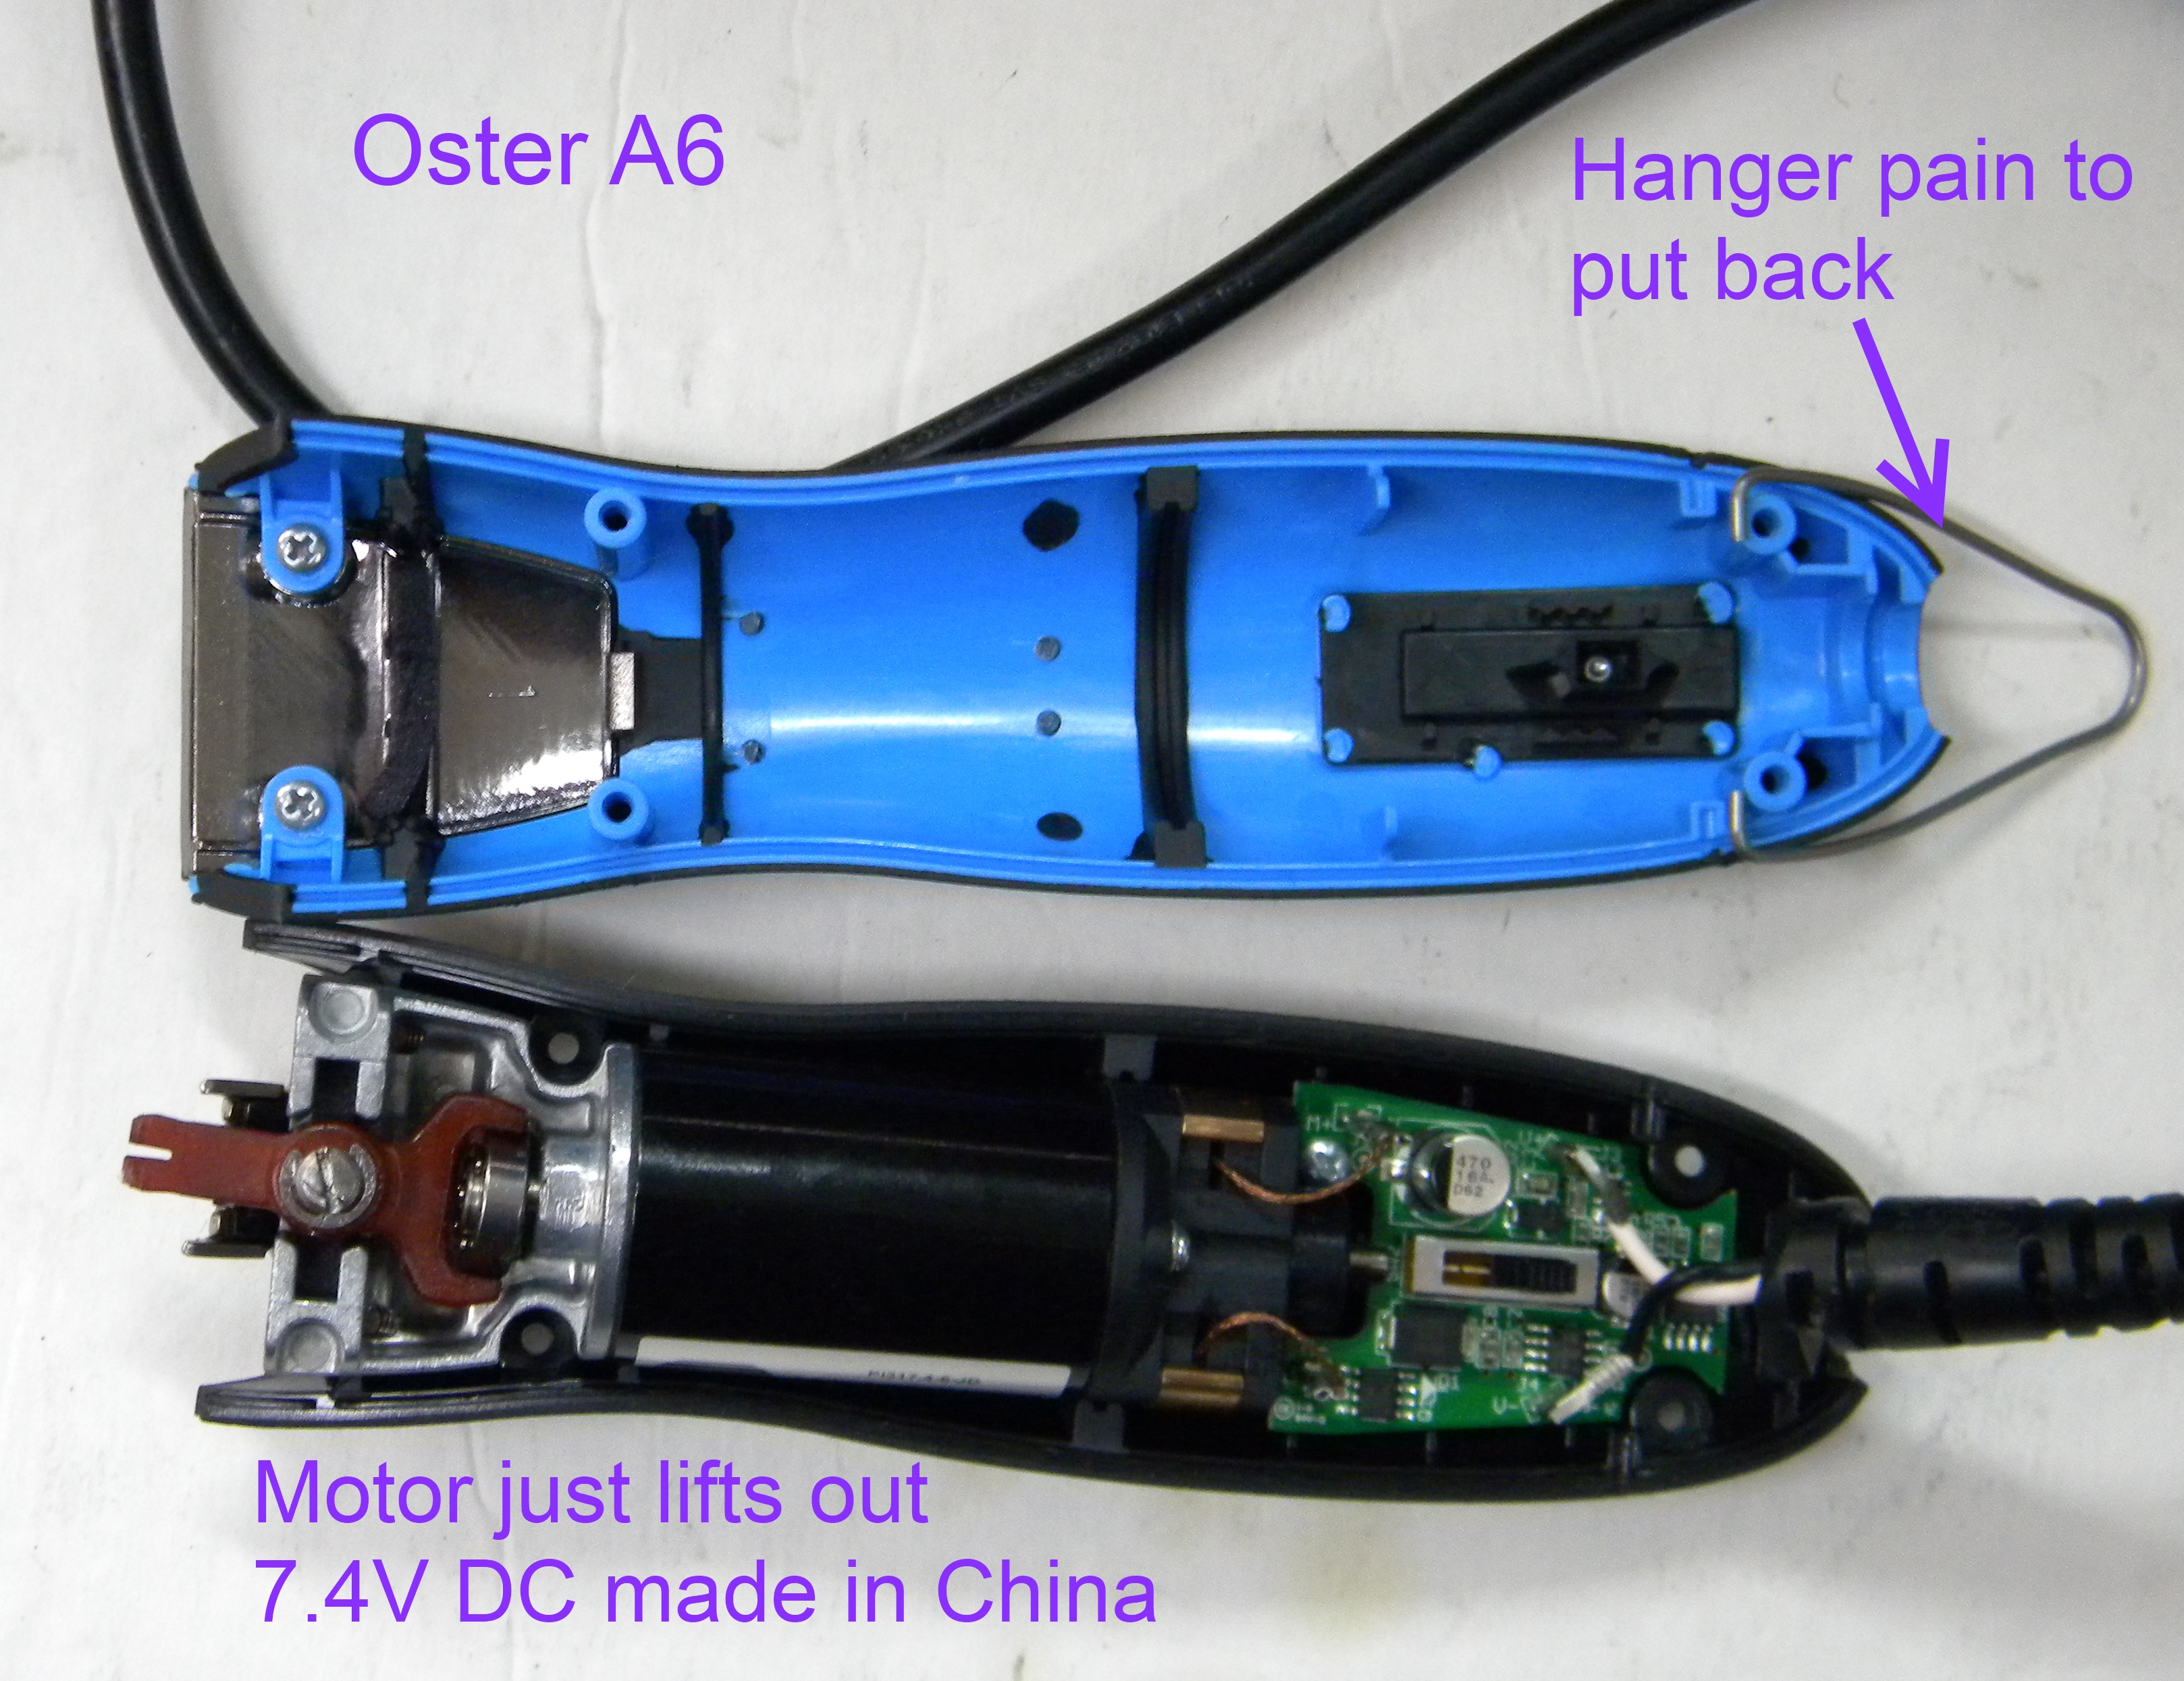 Insides of an Oster A6 clipper photo